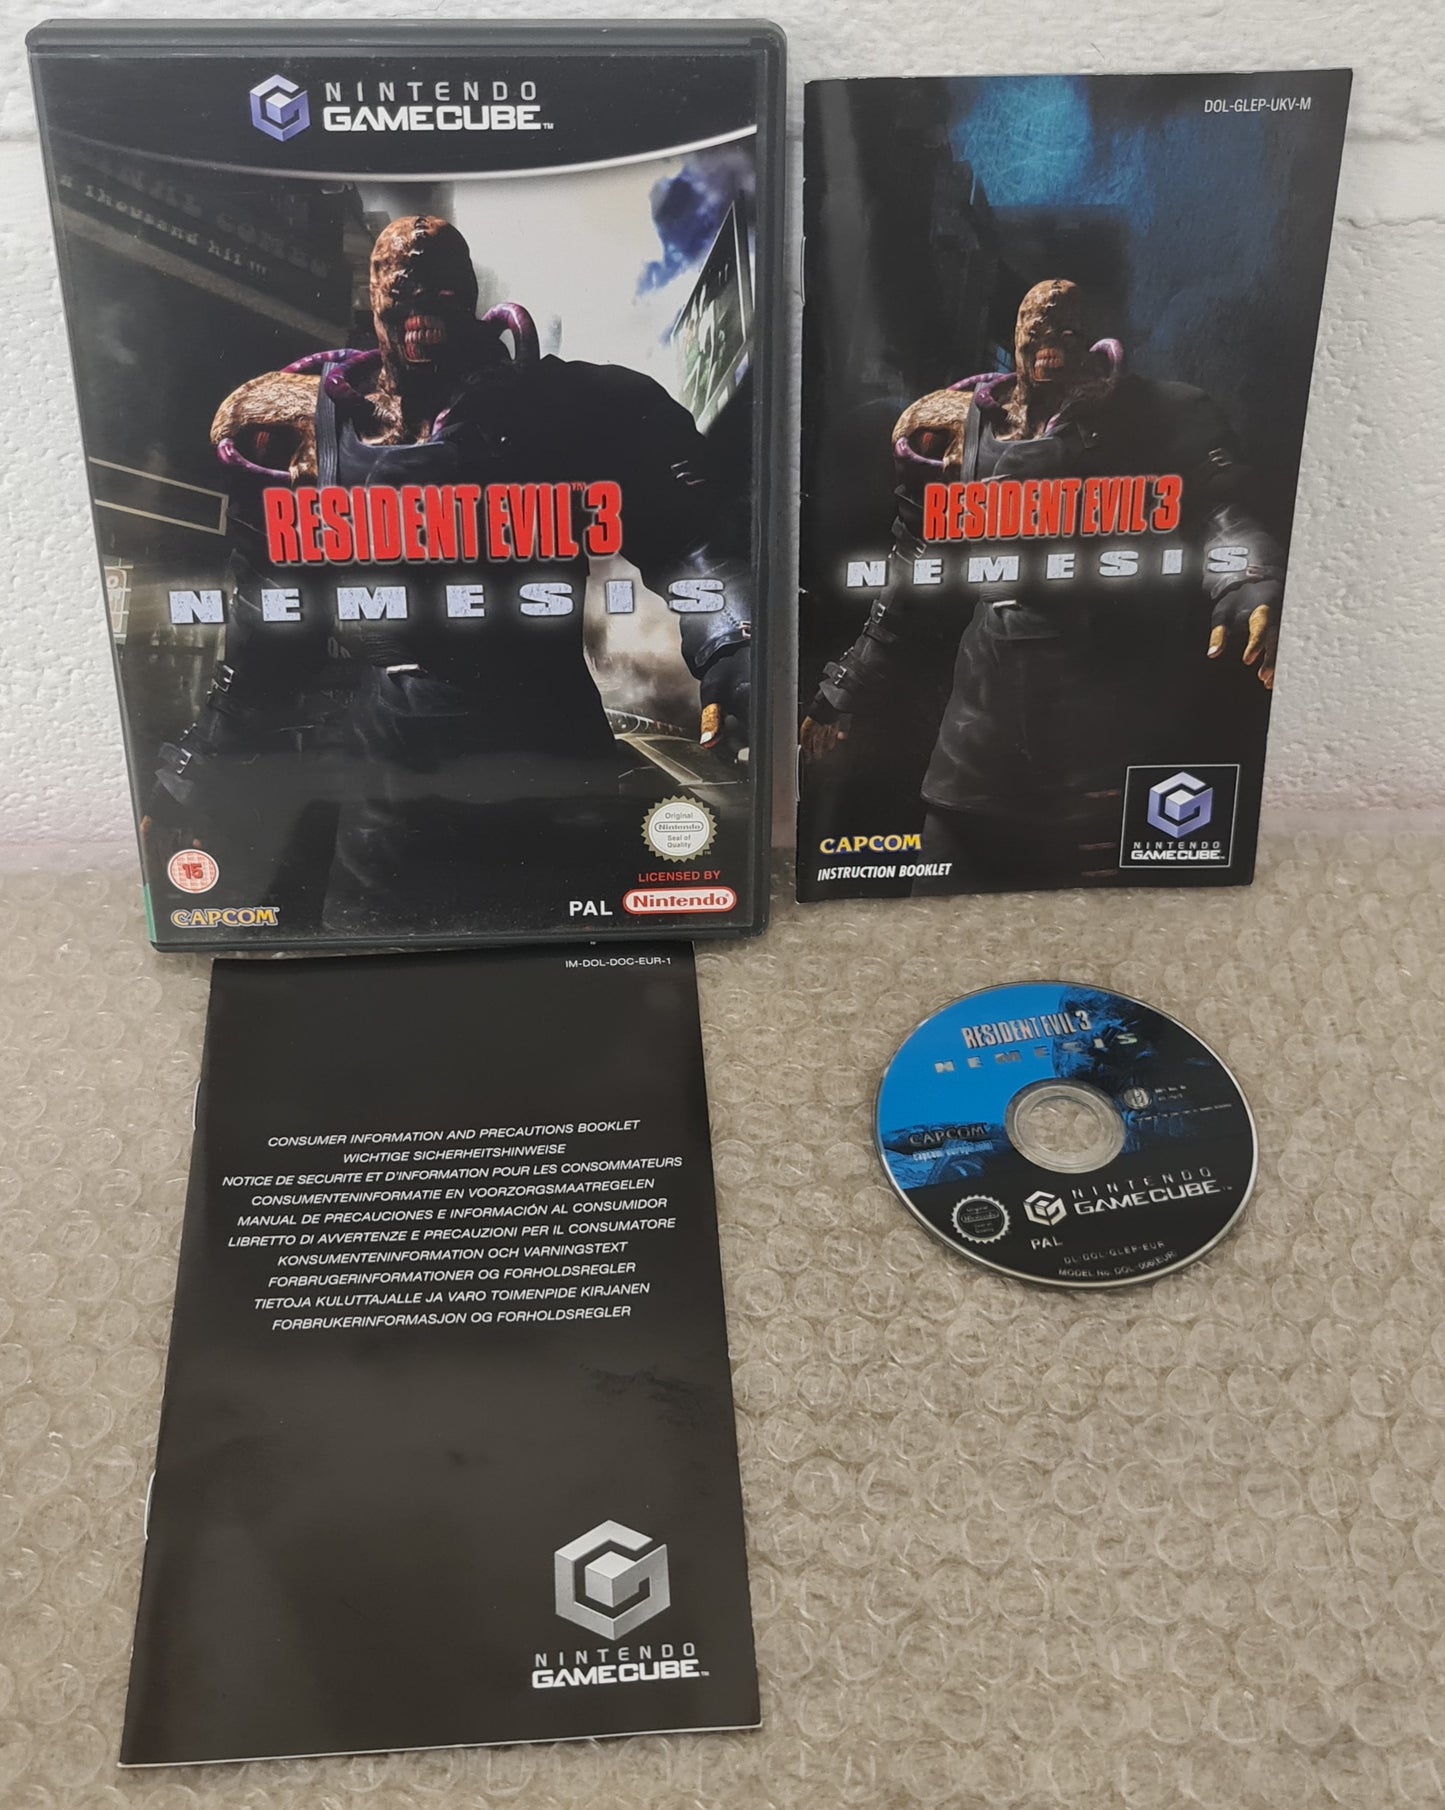 Resident Evil 3 Nemesis Nintendo GameCube Game